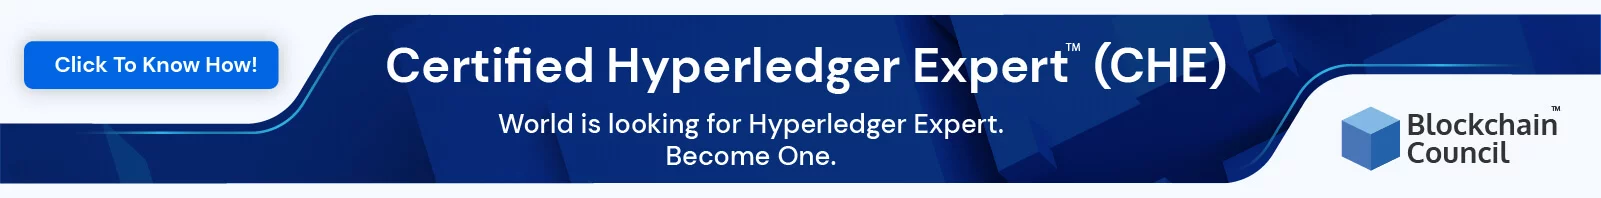 Confluence Mobile - Hyperledger Foundation